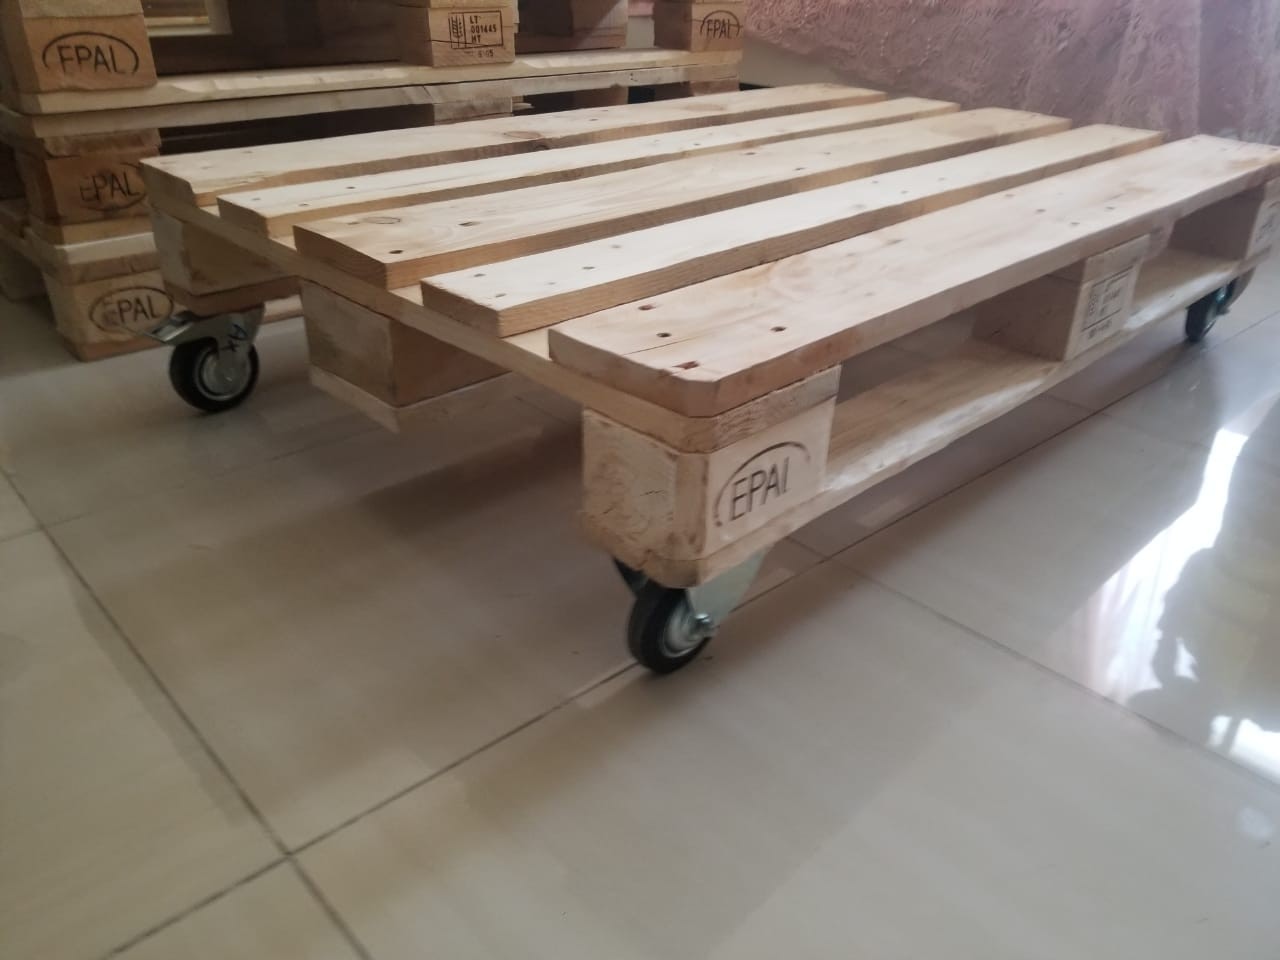 wooden pallets 0542972176